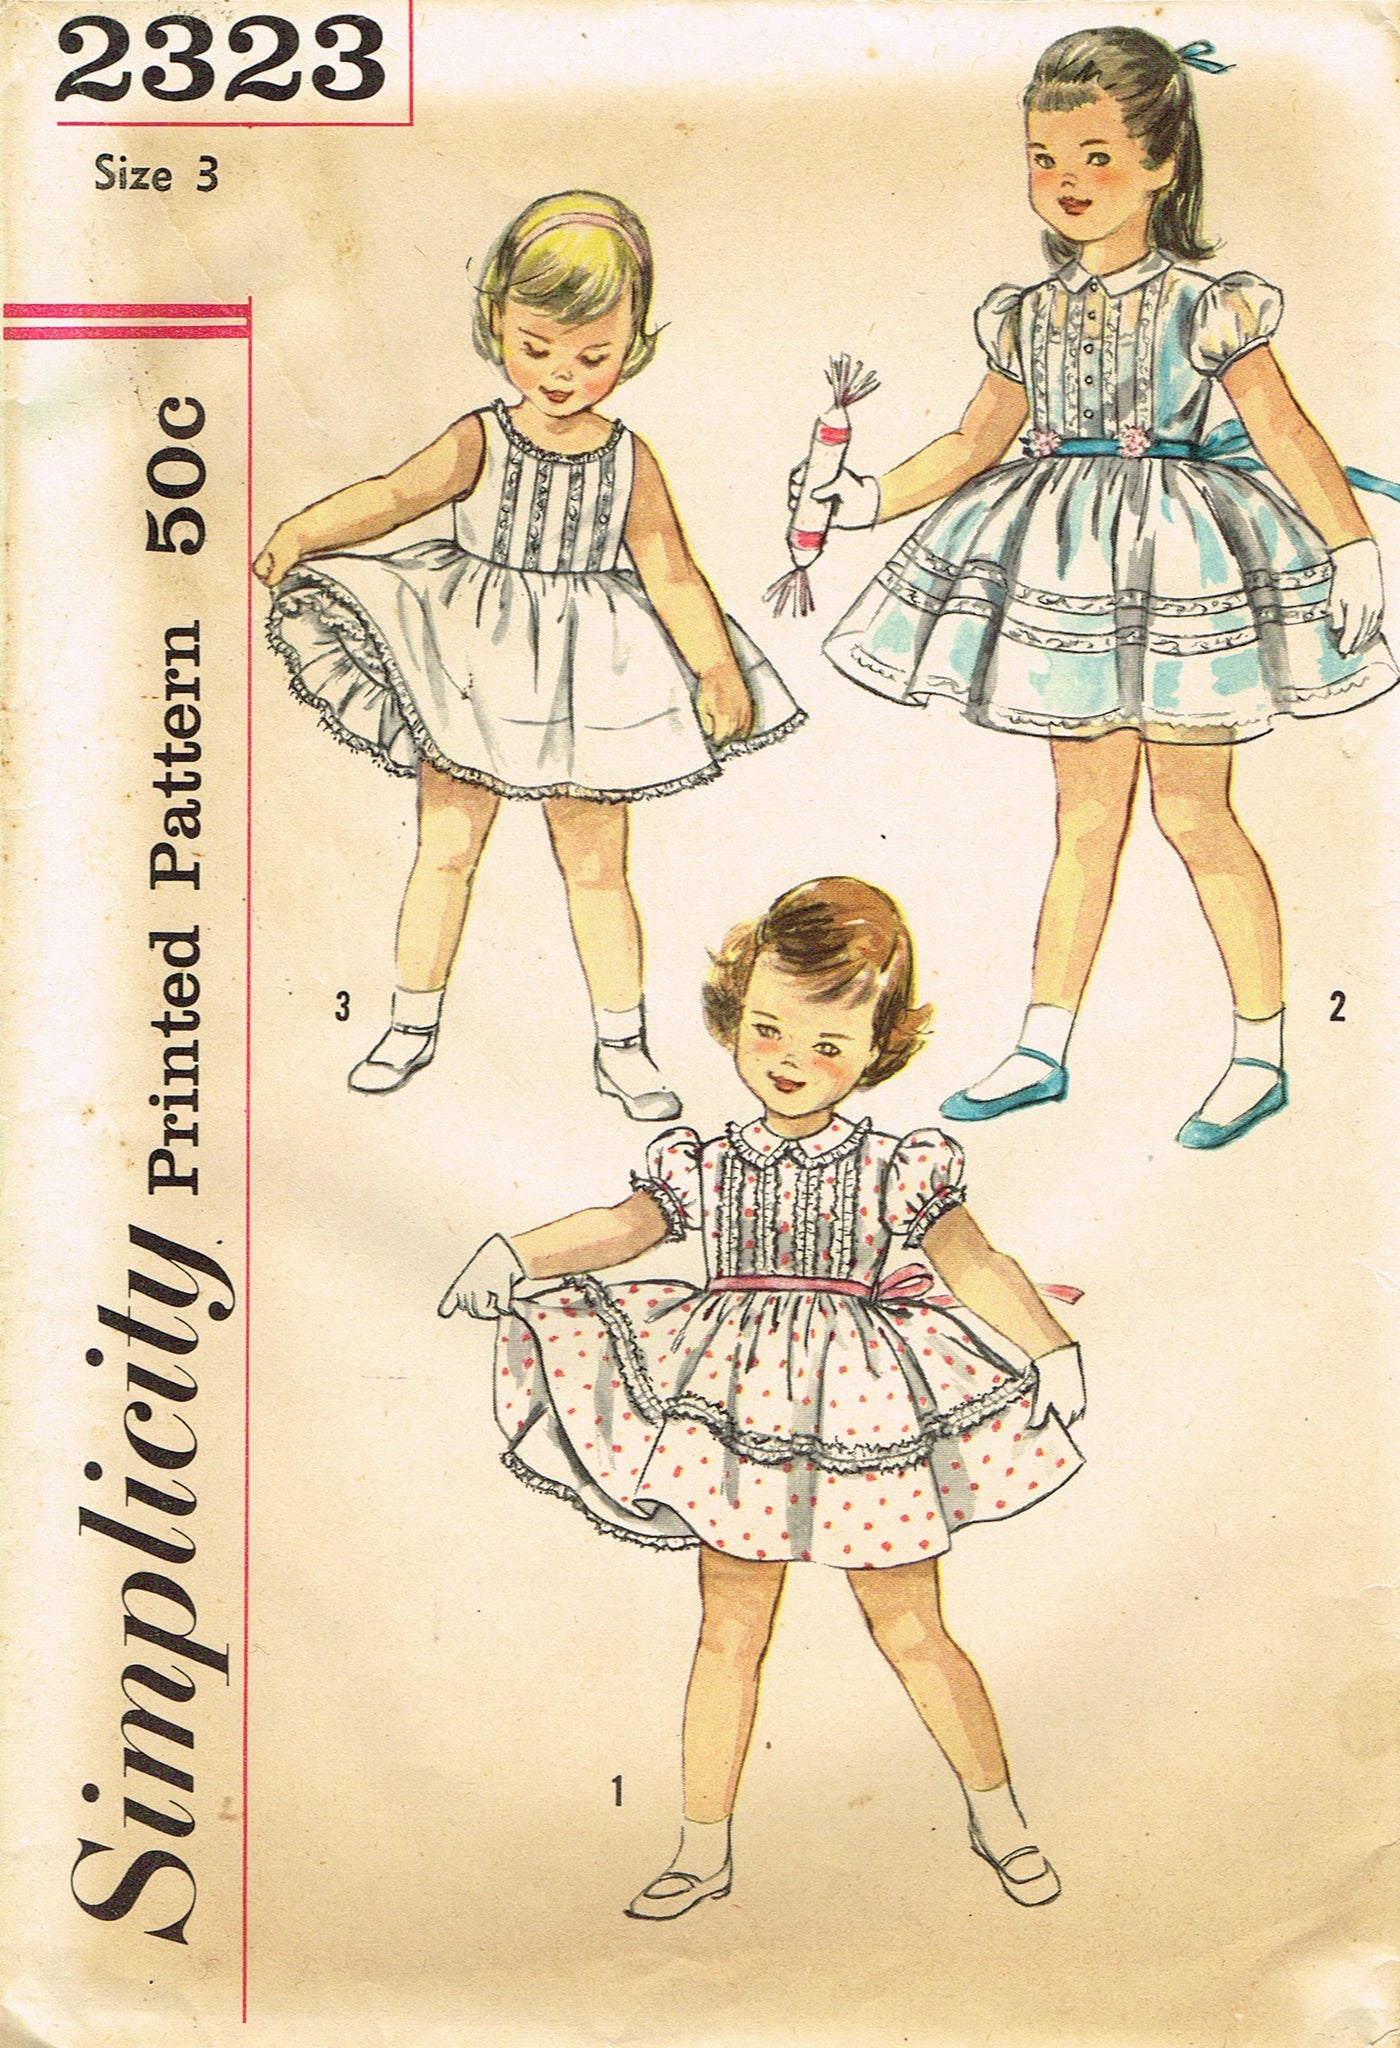 1980s Simplicity 9629 UNCUT Vintage Sewing Pattern Girls Skirt